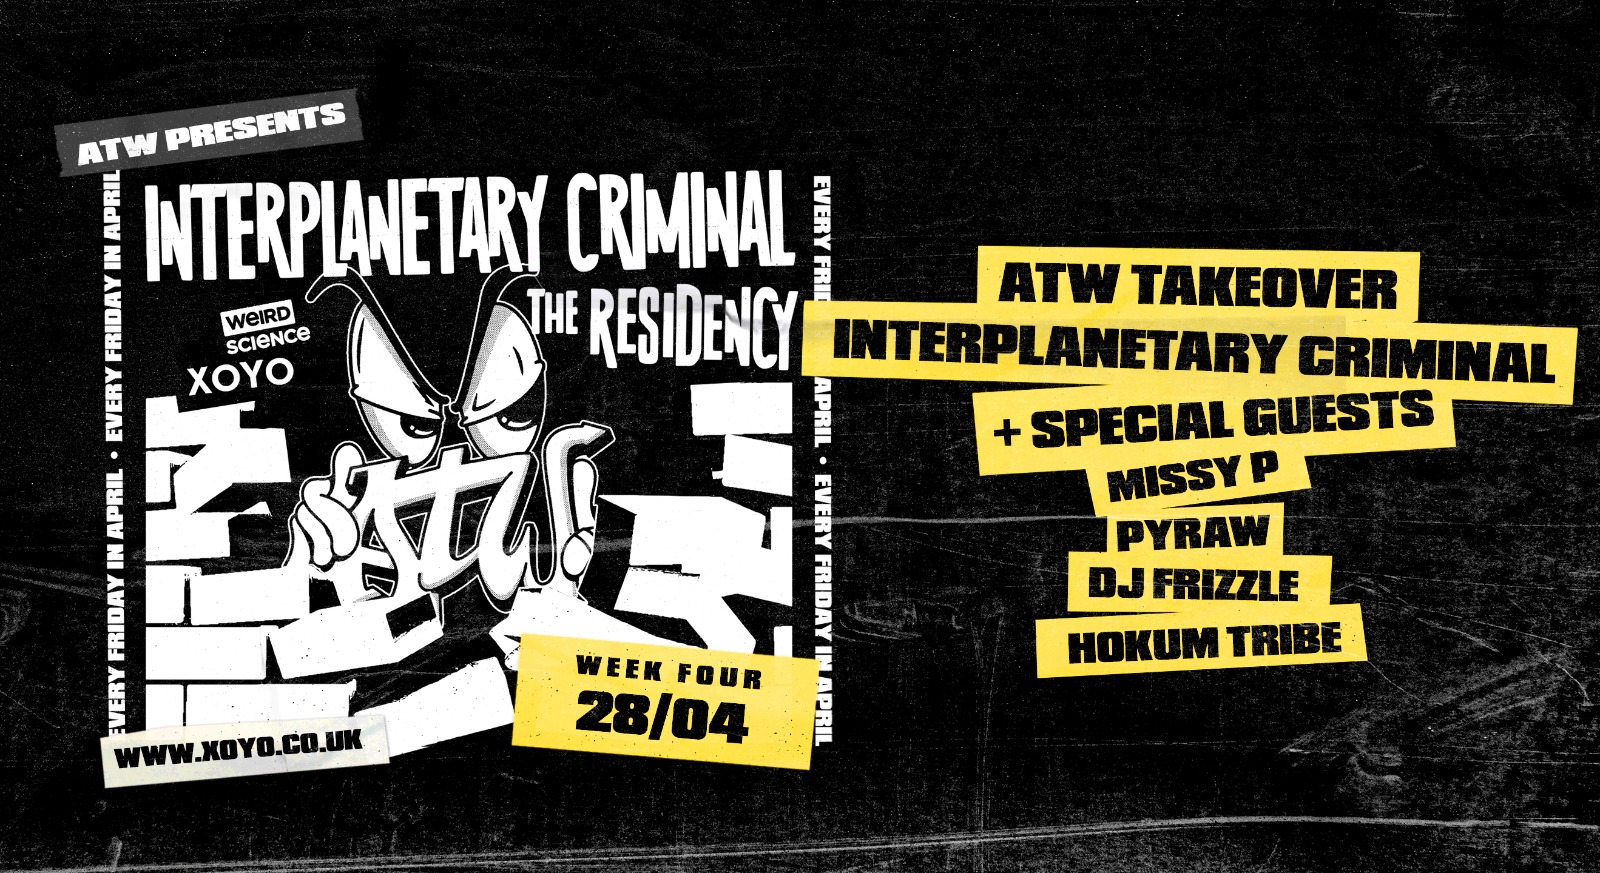 Interplanetary Criminal : The Residency (Week 4)